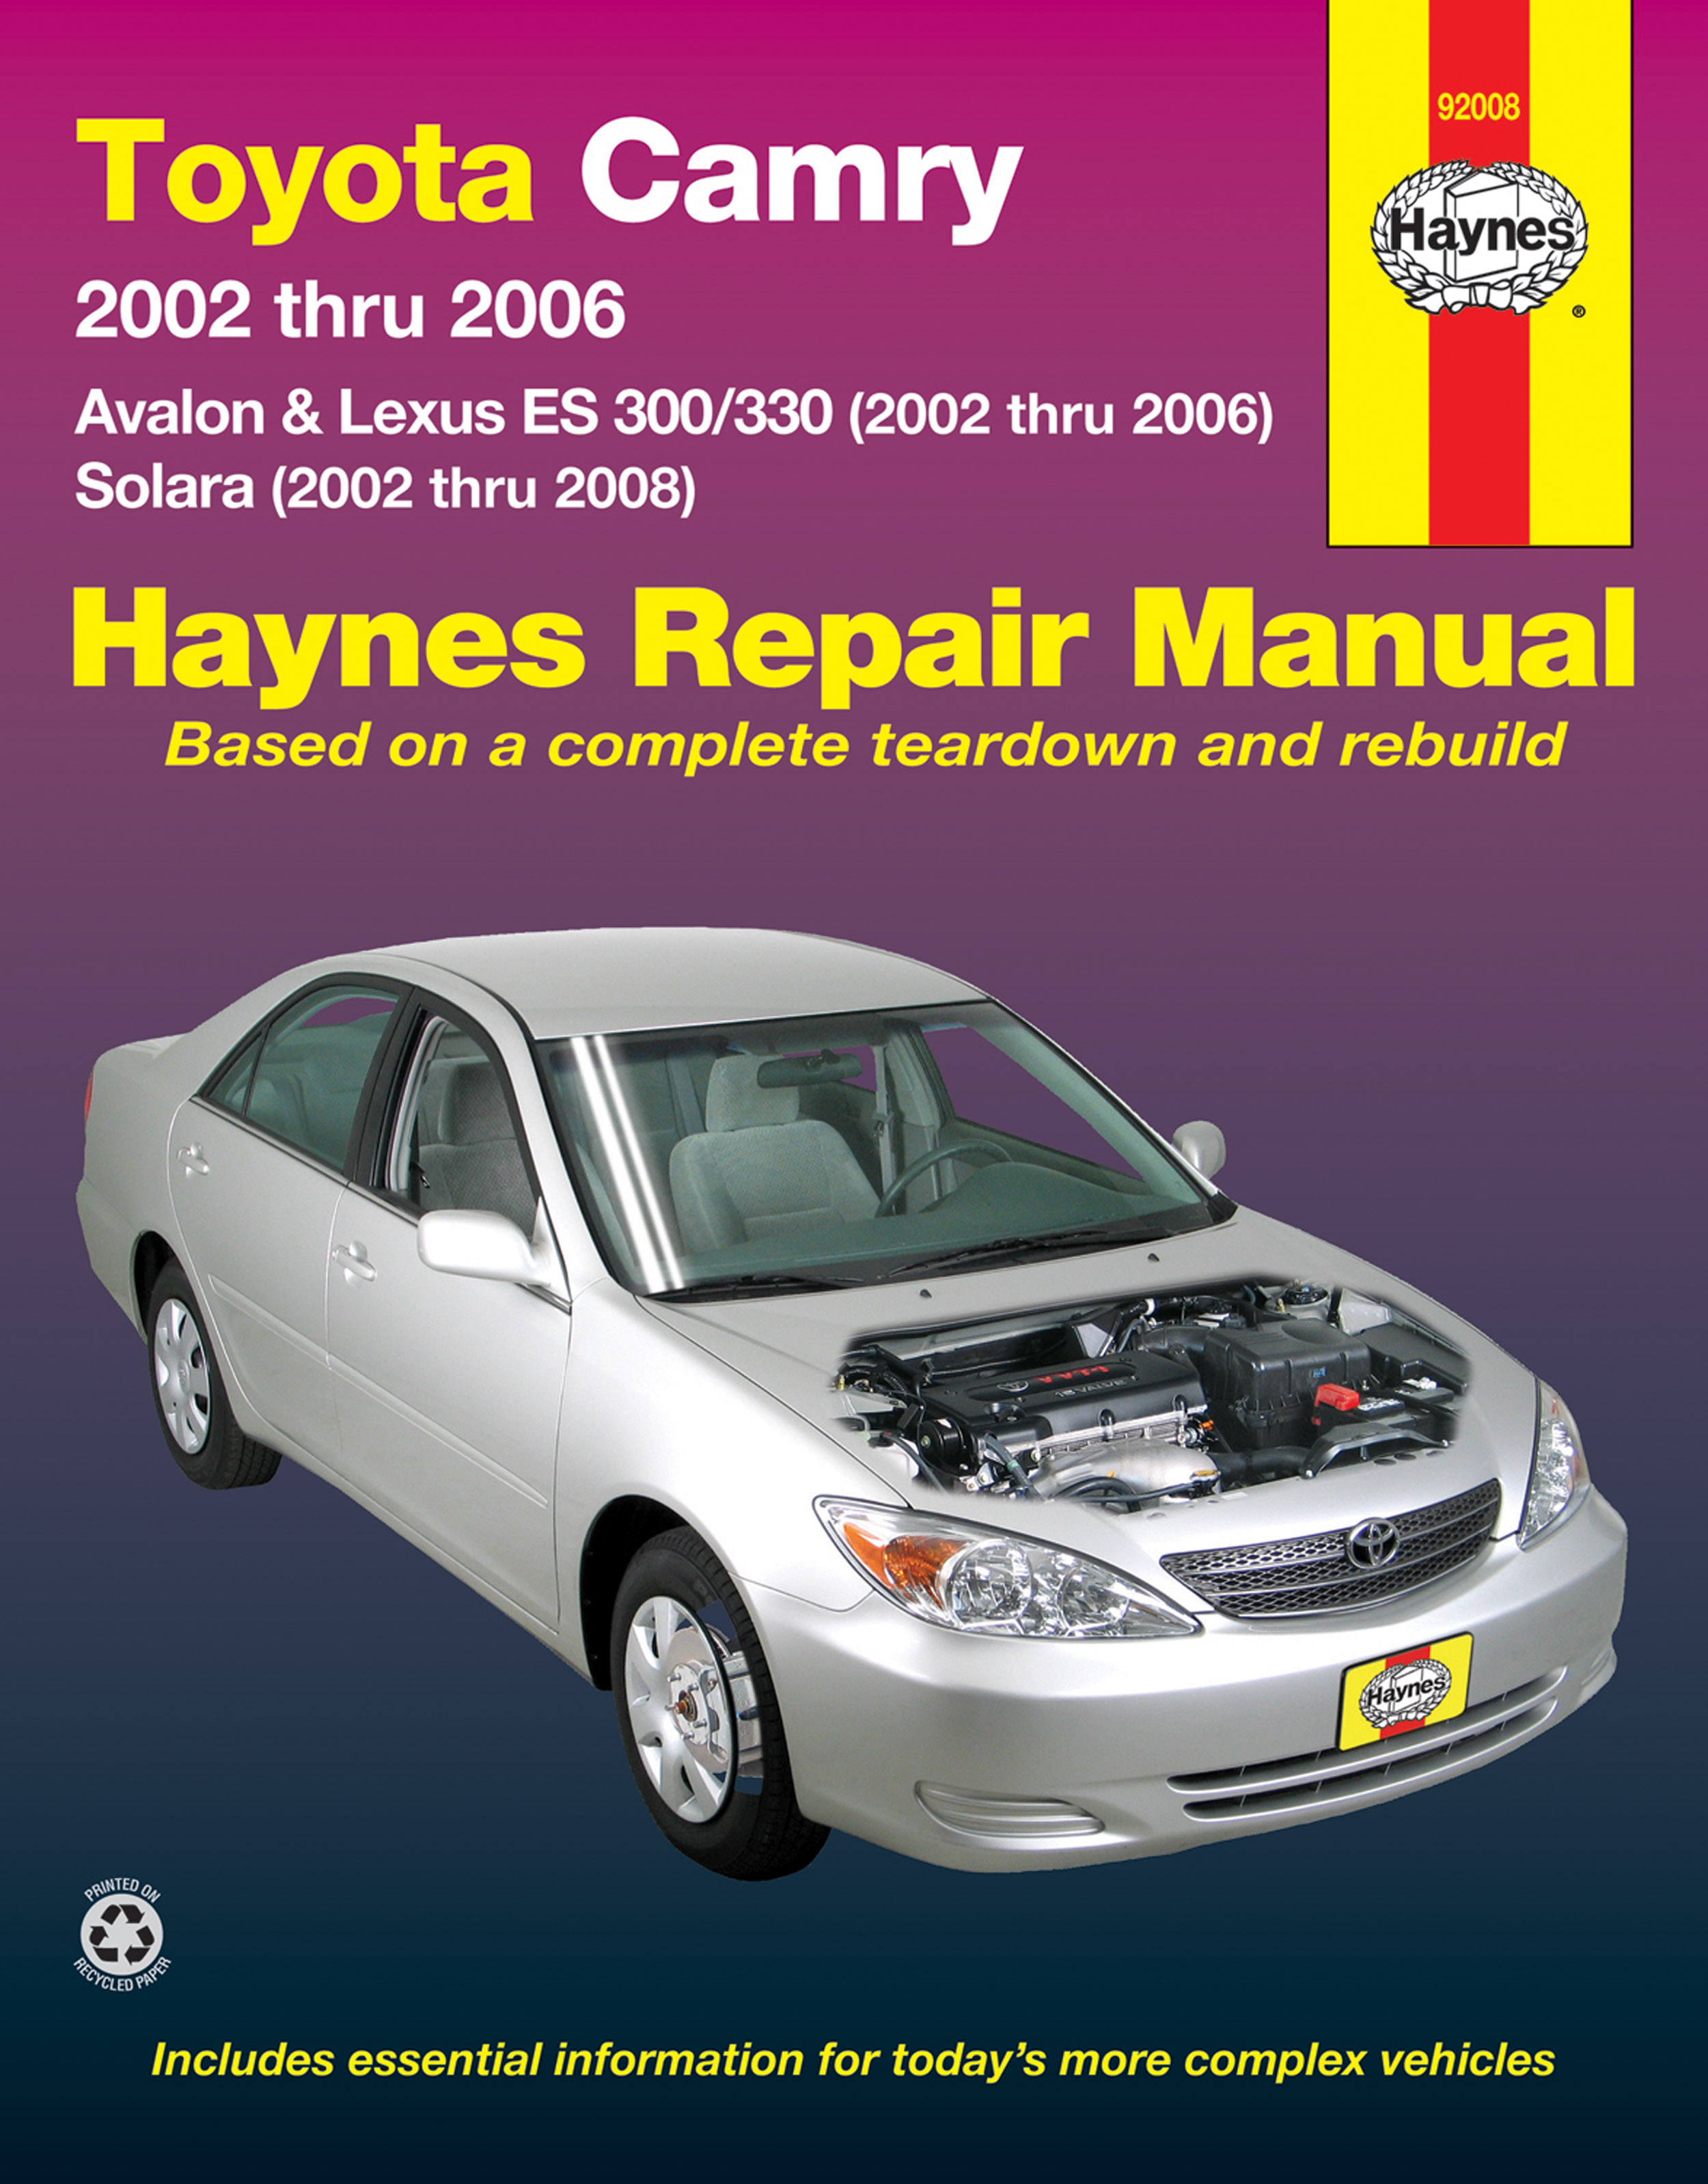 Haynes Workshop Manual Toyota Camry & Toyota Aurion 2006-2013 Service & Repair 